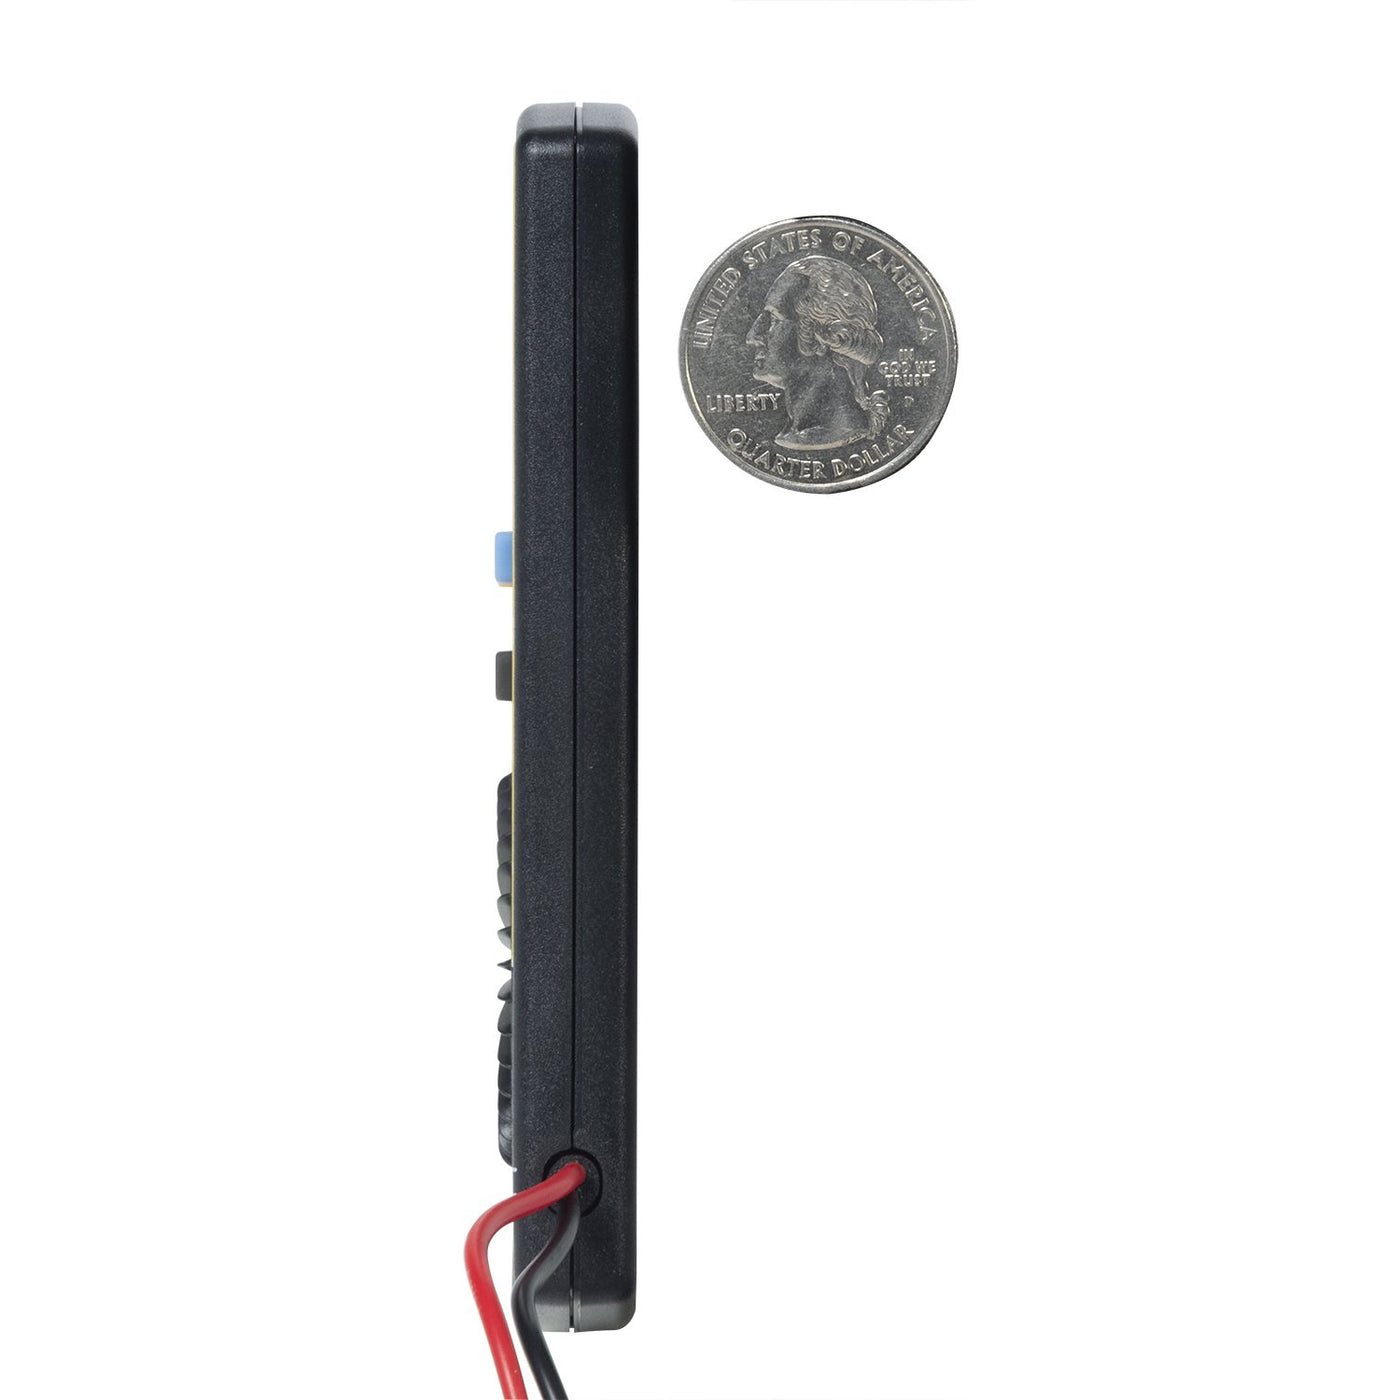 Sperry Instruments DM4A Pocket Digital Multimeter